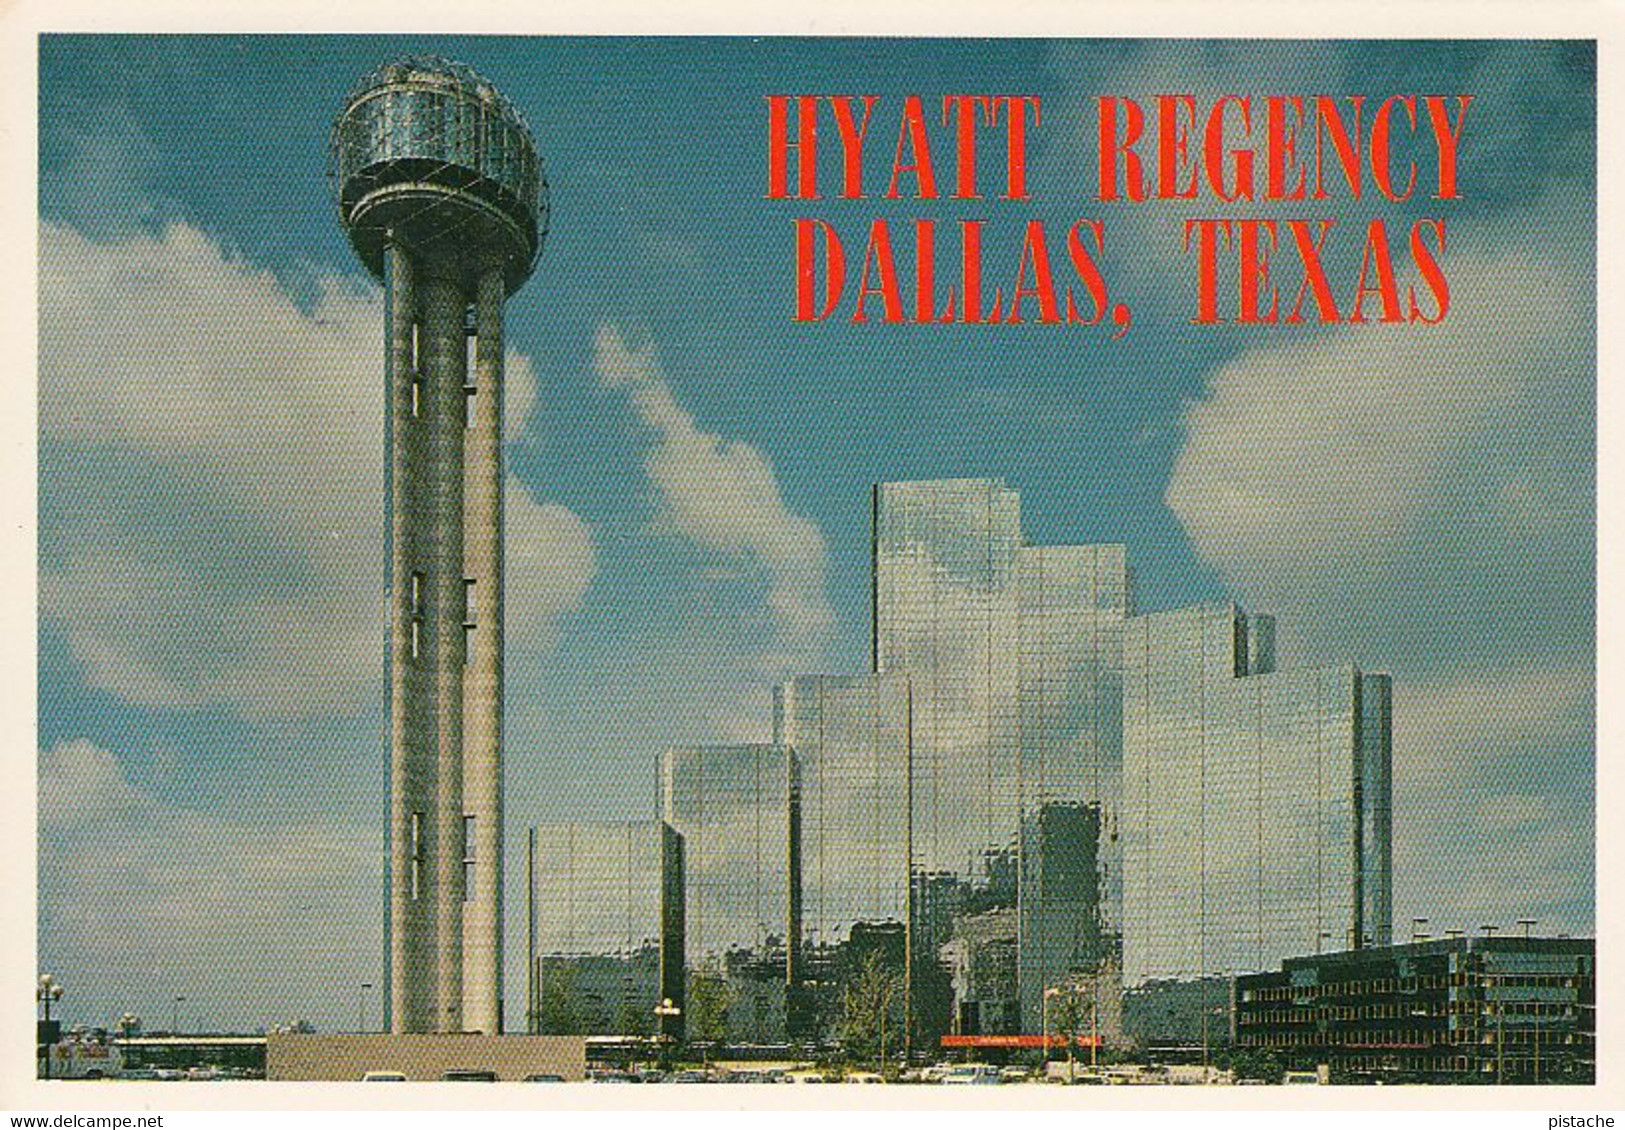 Dallas At Reunion Texas TX USA - Hyatt Regency Hotel - Size 4 X 6 - Unused - 2 Scans - Dallas